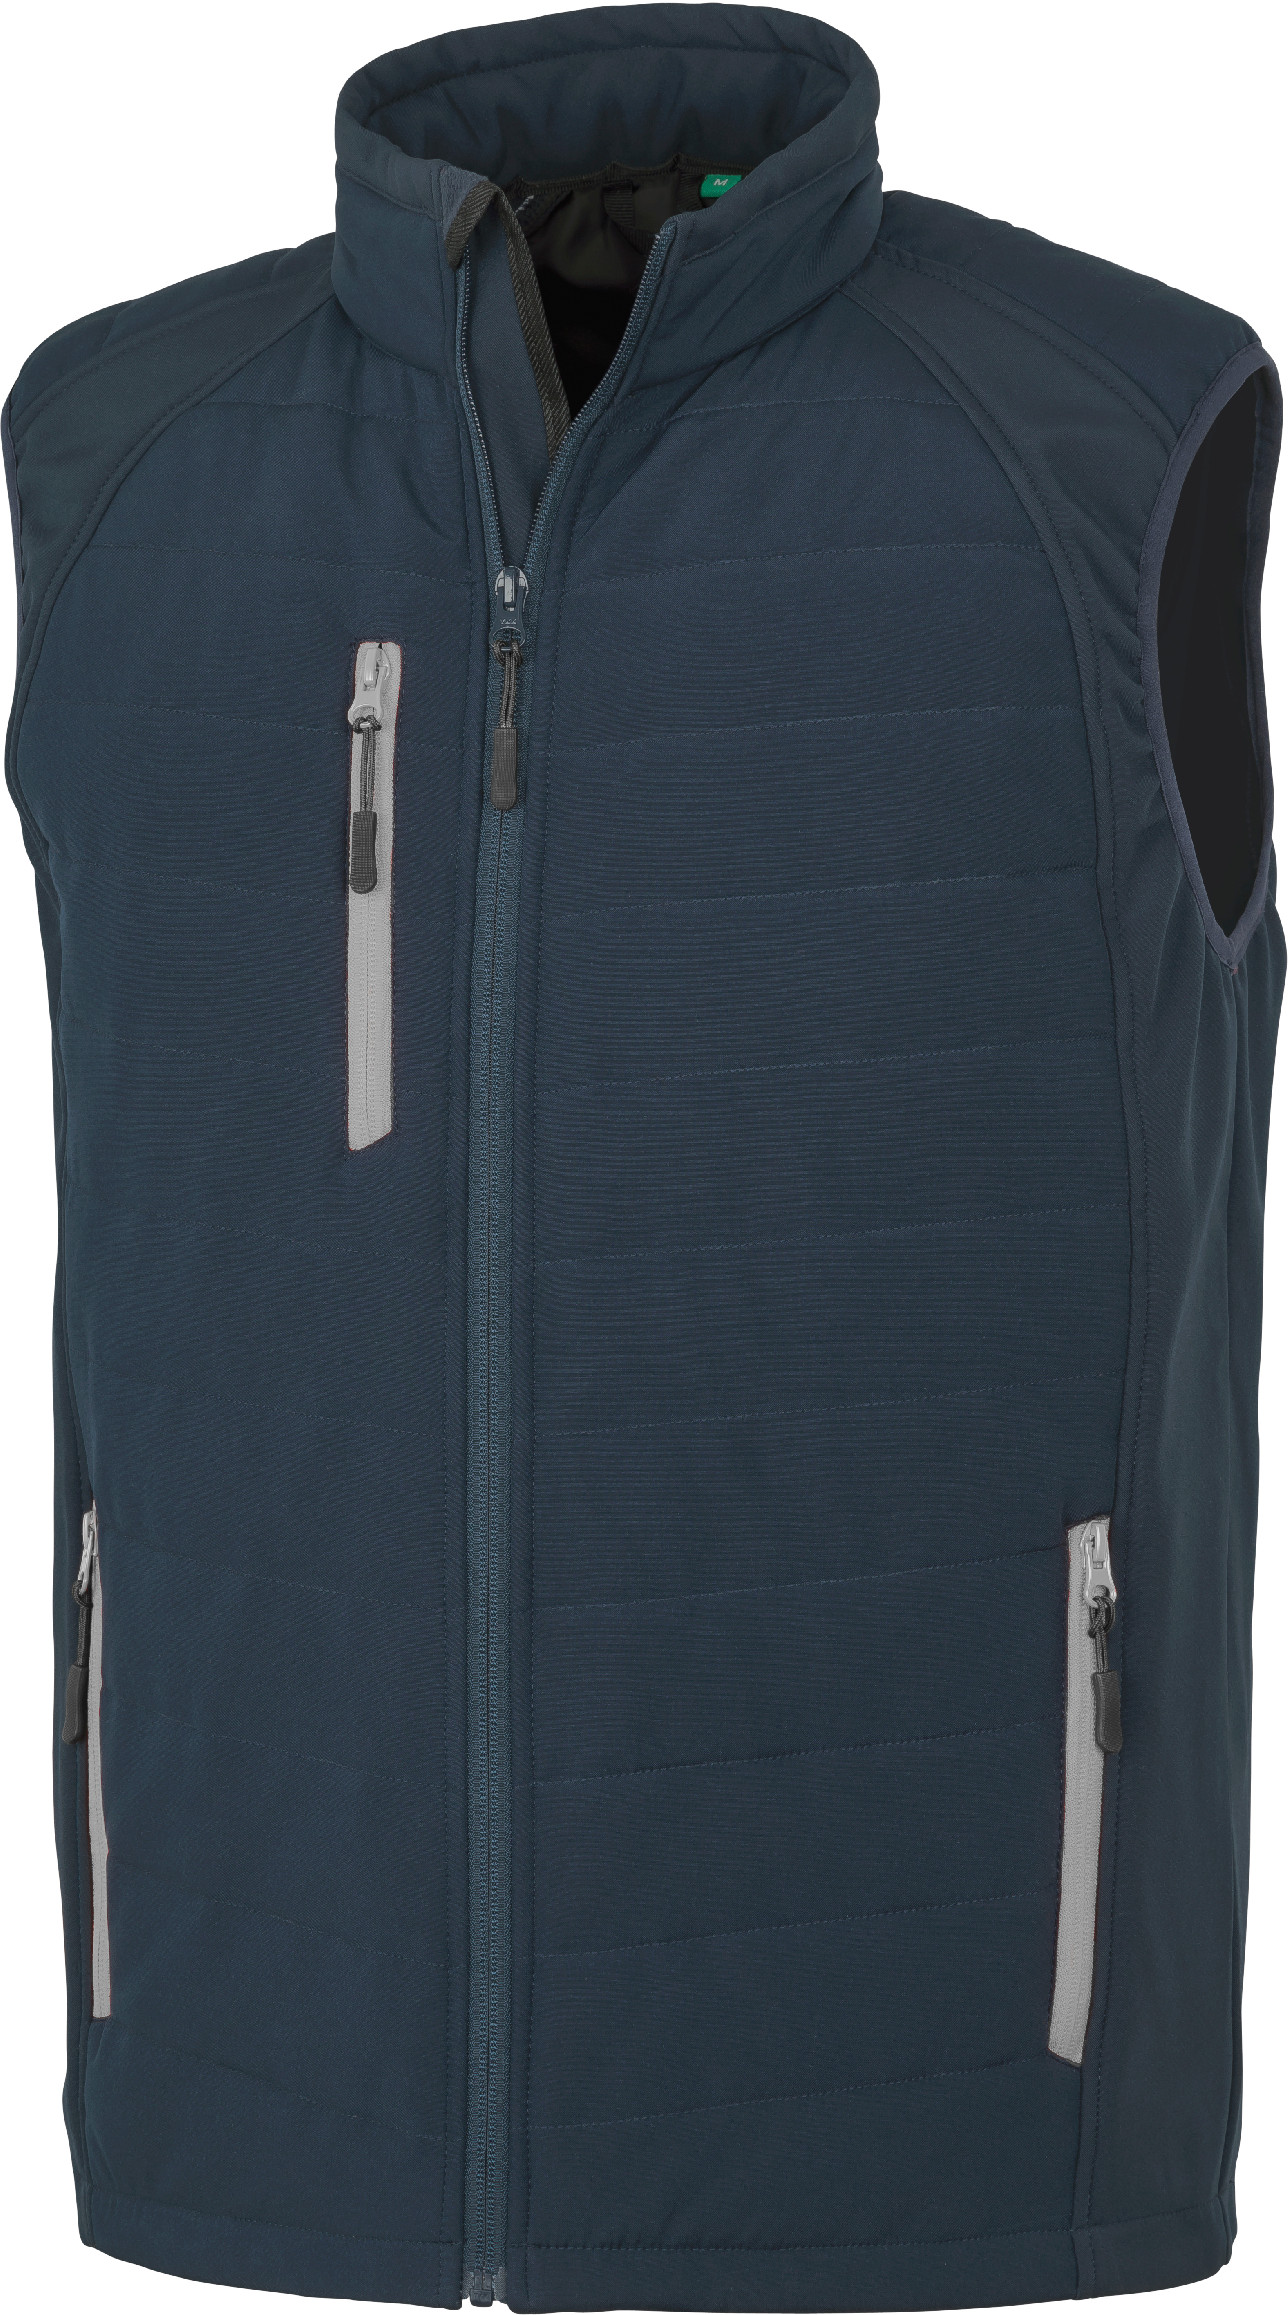 Polstrovaná softshell vesta Compass R238X Barva: námořní modrá-šedá, Velikost: S